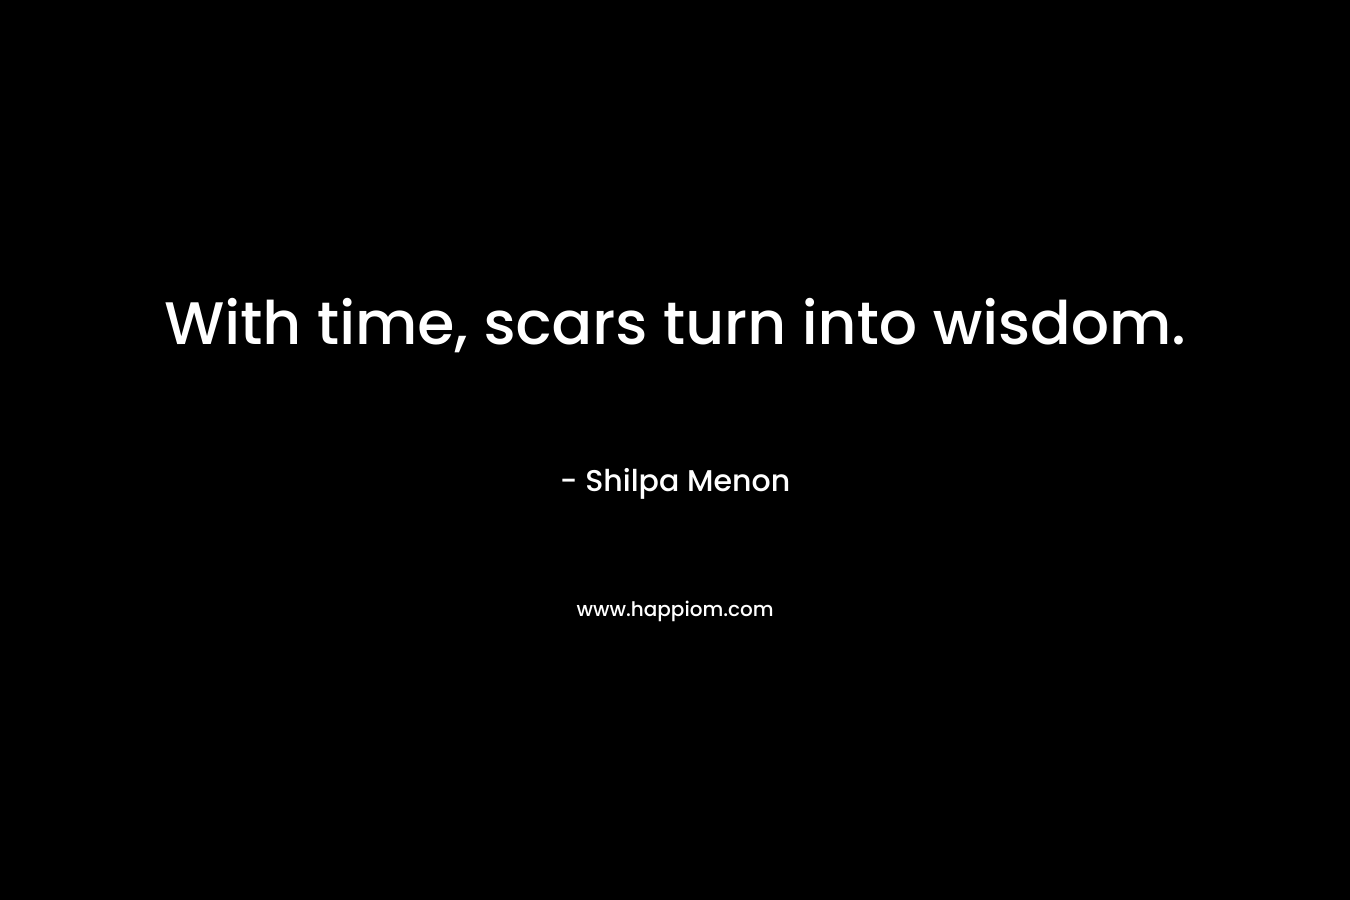 With time, scars turn into wisdom. – Shilpa Menon